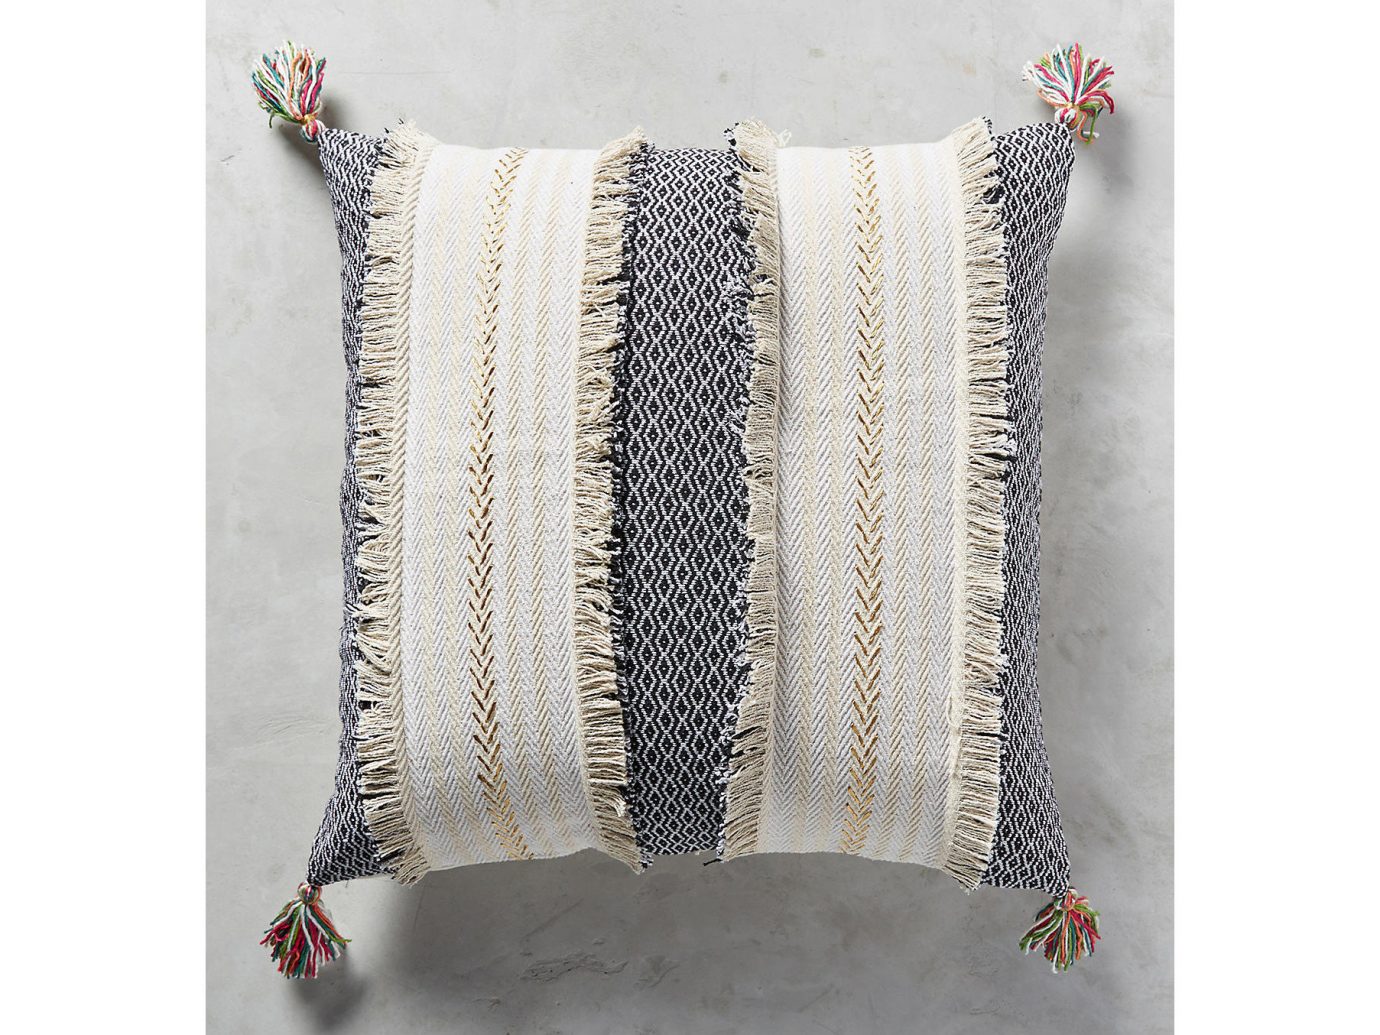 Amsterdam Style + Design The Netherlands Travel Shop throw pillow cushion pillow linens